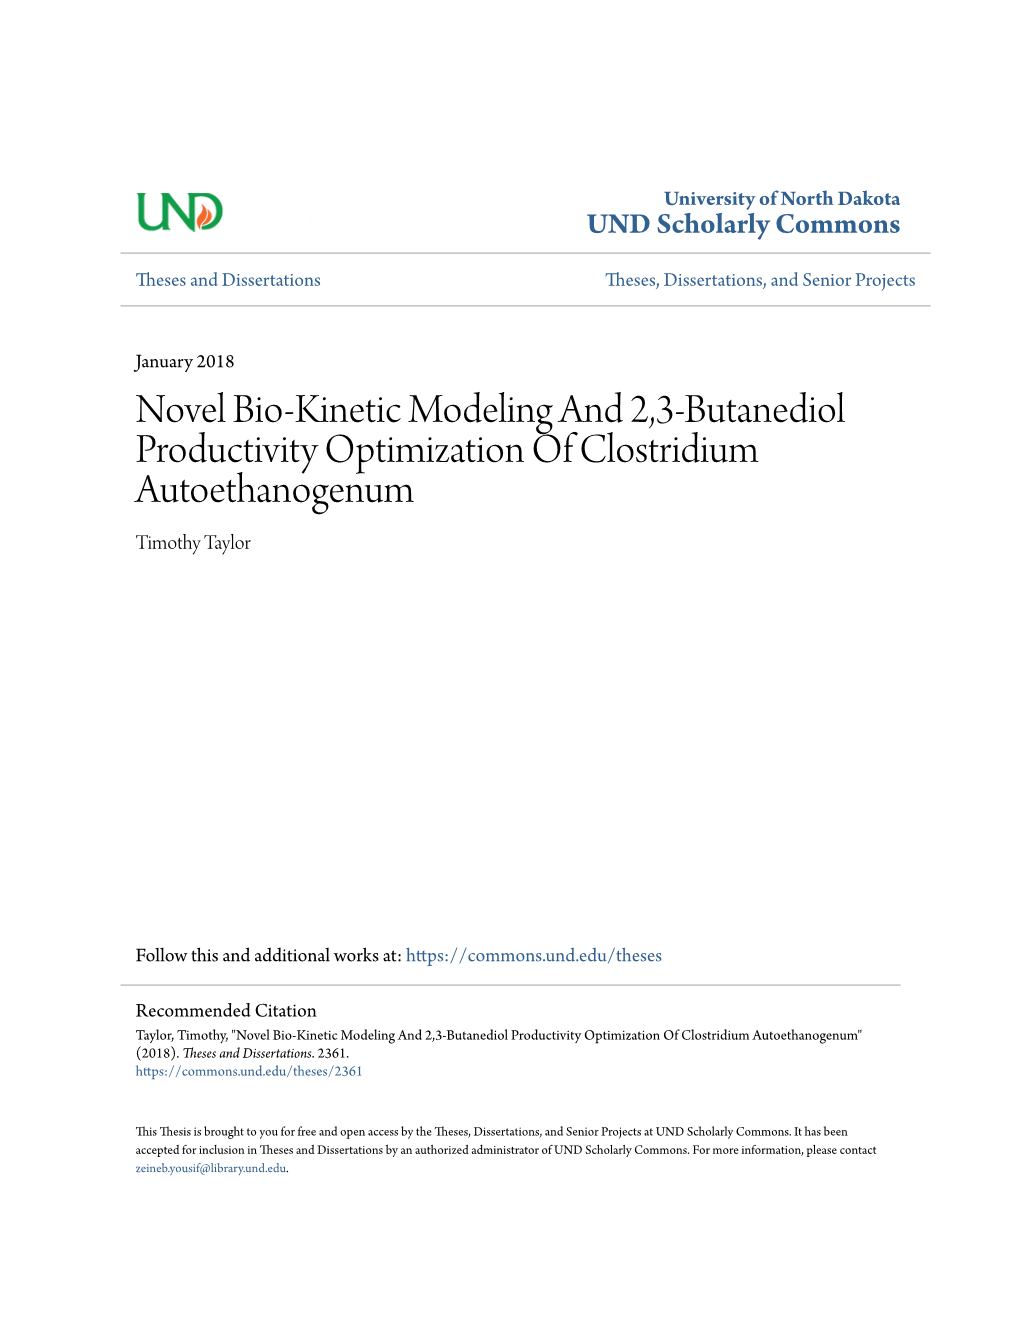 Novel Bio-Kinetic Modeling and 2,3-Butanediol Productivity Optimization of Clostridium Autoethanogenum Timothy Taylor